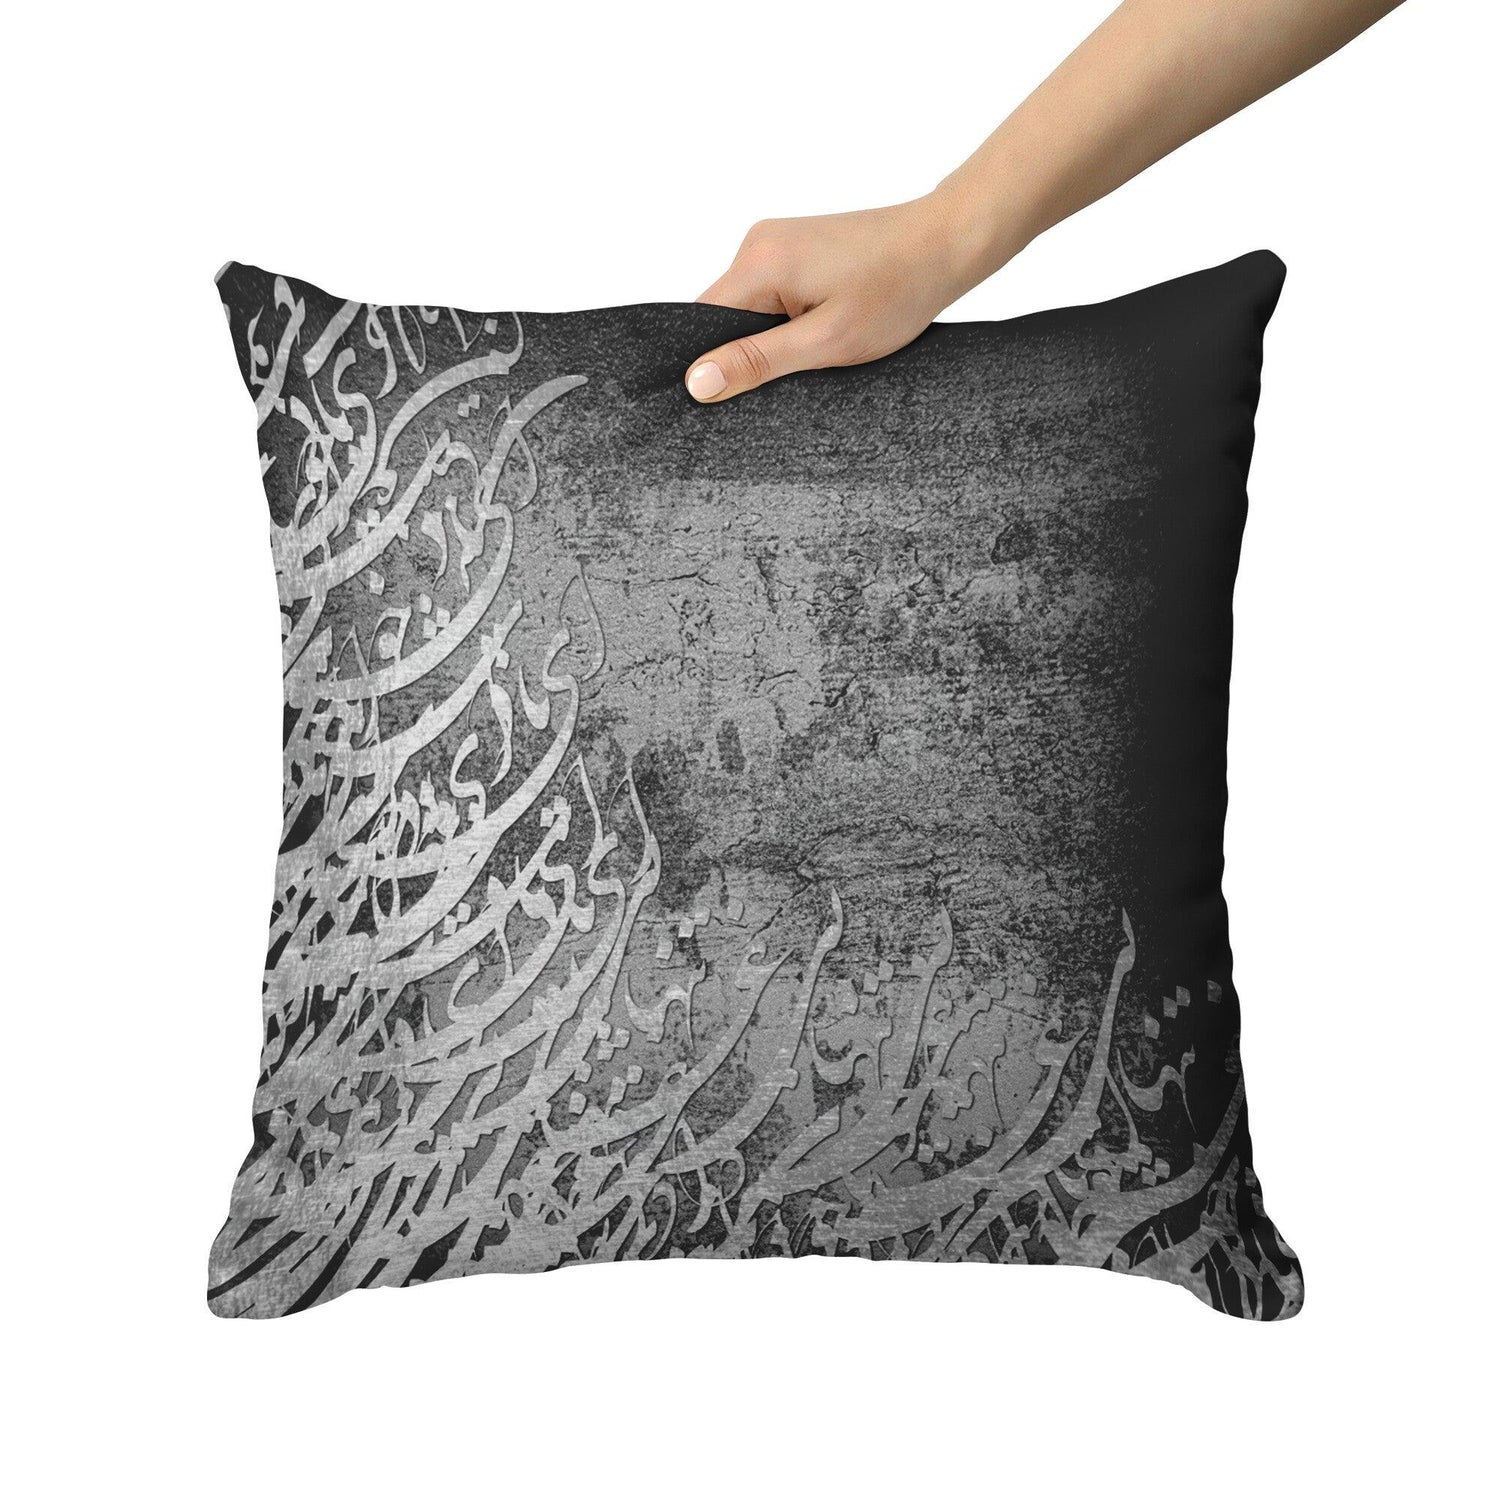 Ey Padeshahe khooban - Persian Pillow - ORIAVI Persian Art, Persian Pillow